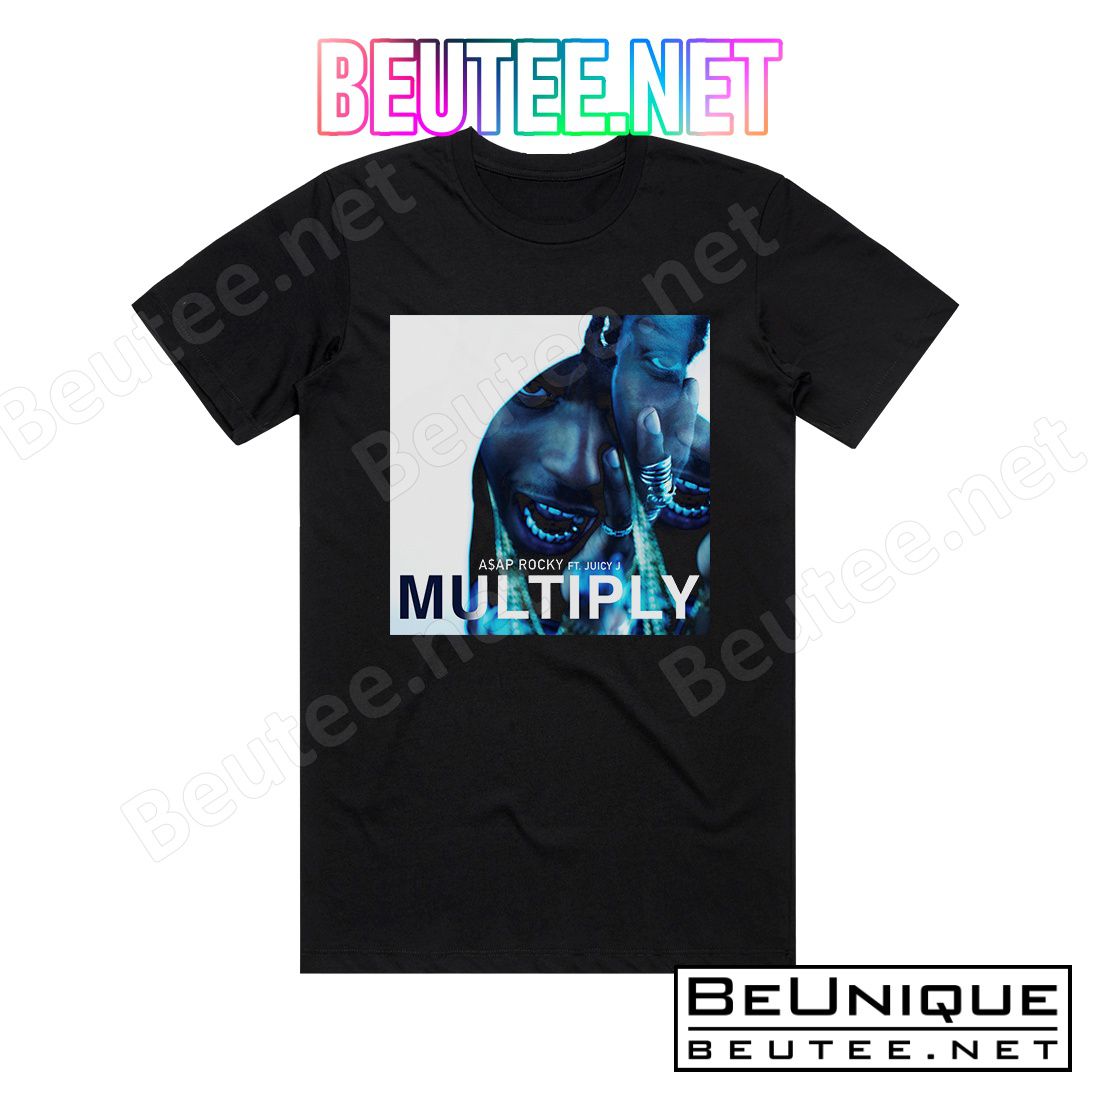 ASAP Rocky Multiply Album Cover T-Shirt